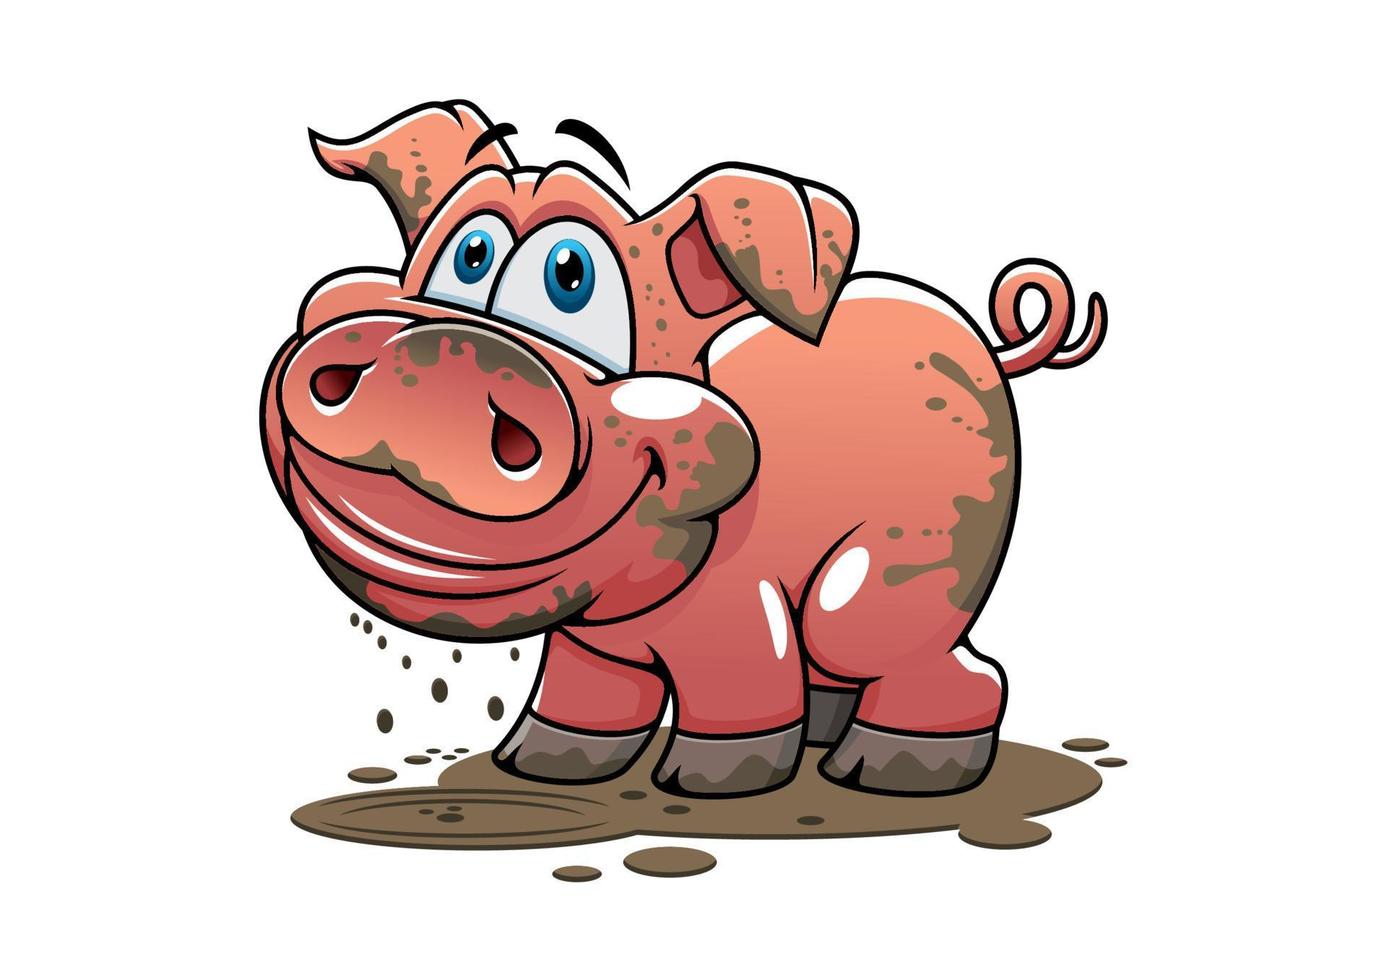 Cute little muddy cartoon pig vector